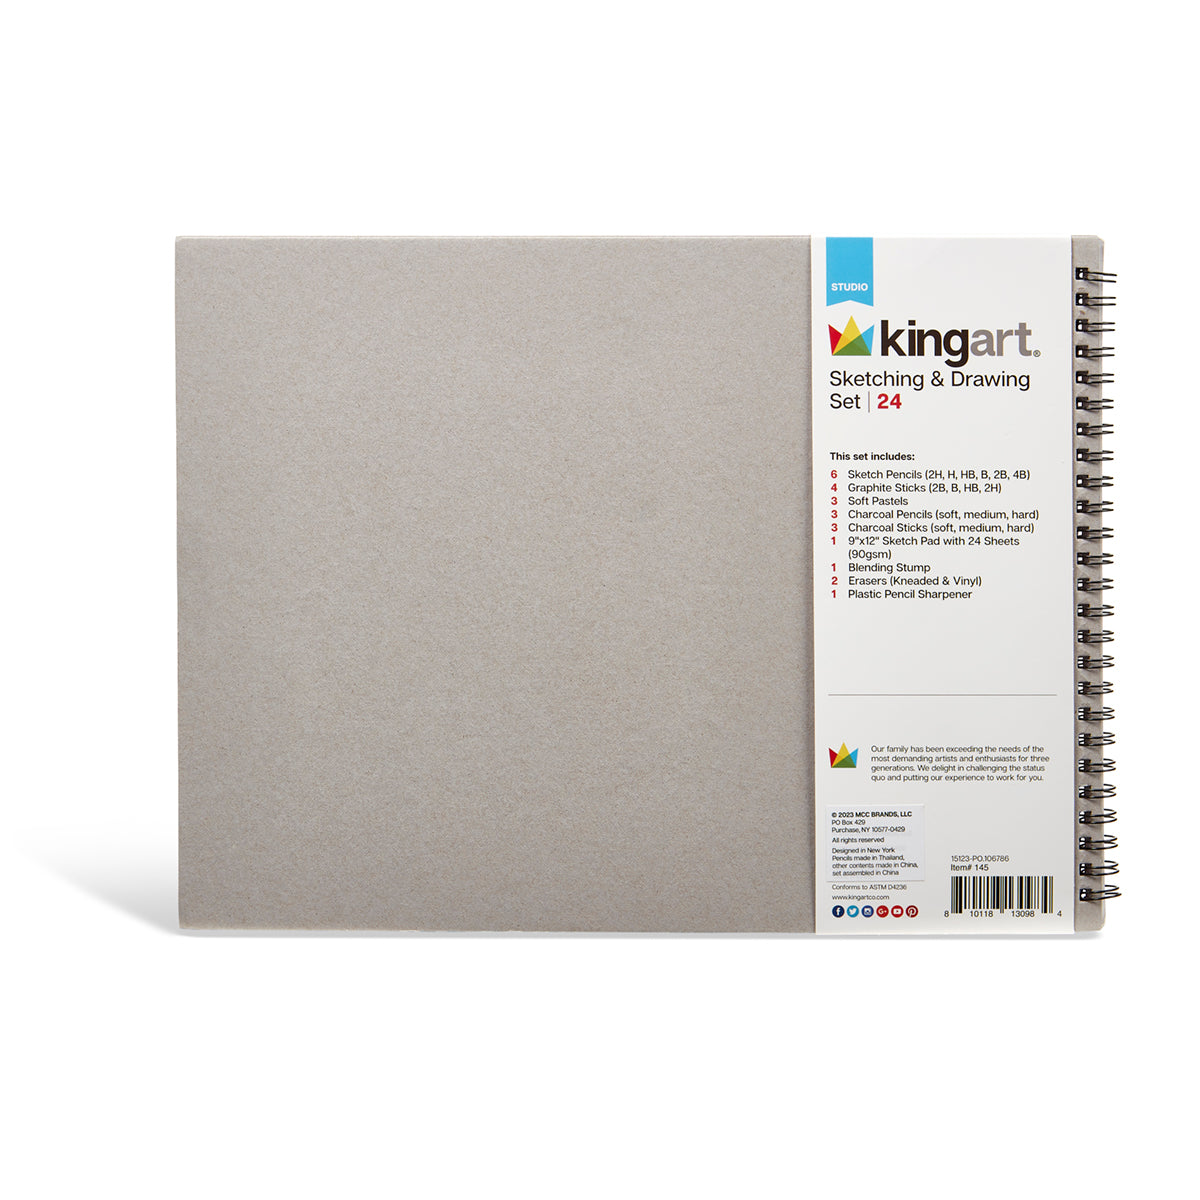 Weststar / The Art Shop, Buy Arto Hard Cover Sketch Book - Black Paper -  140gsm